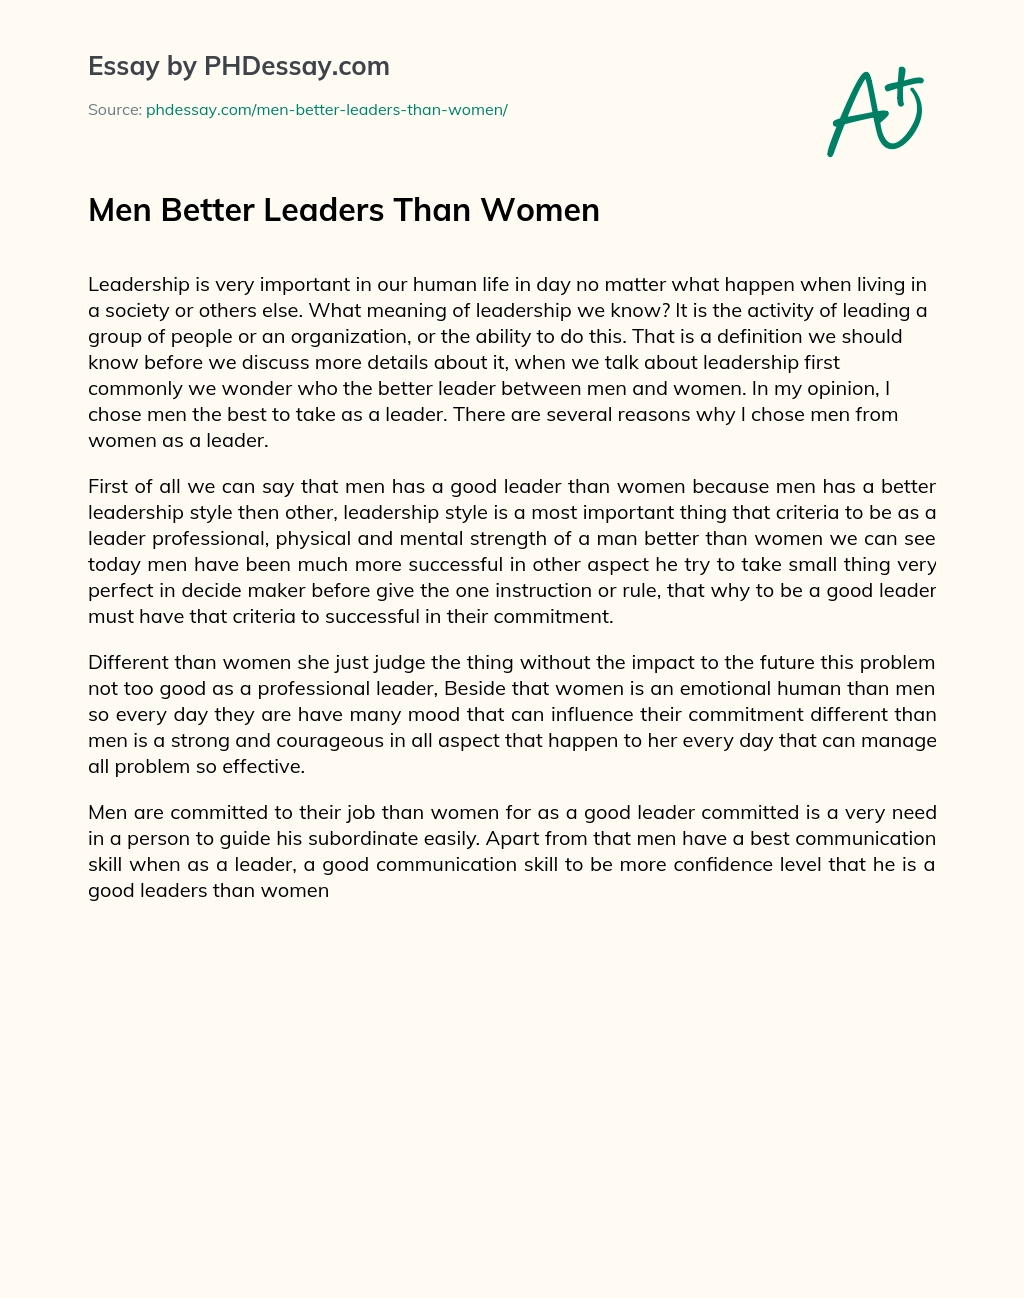 Men Better Leaders Than Women essay